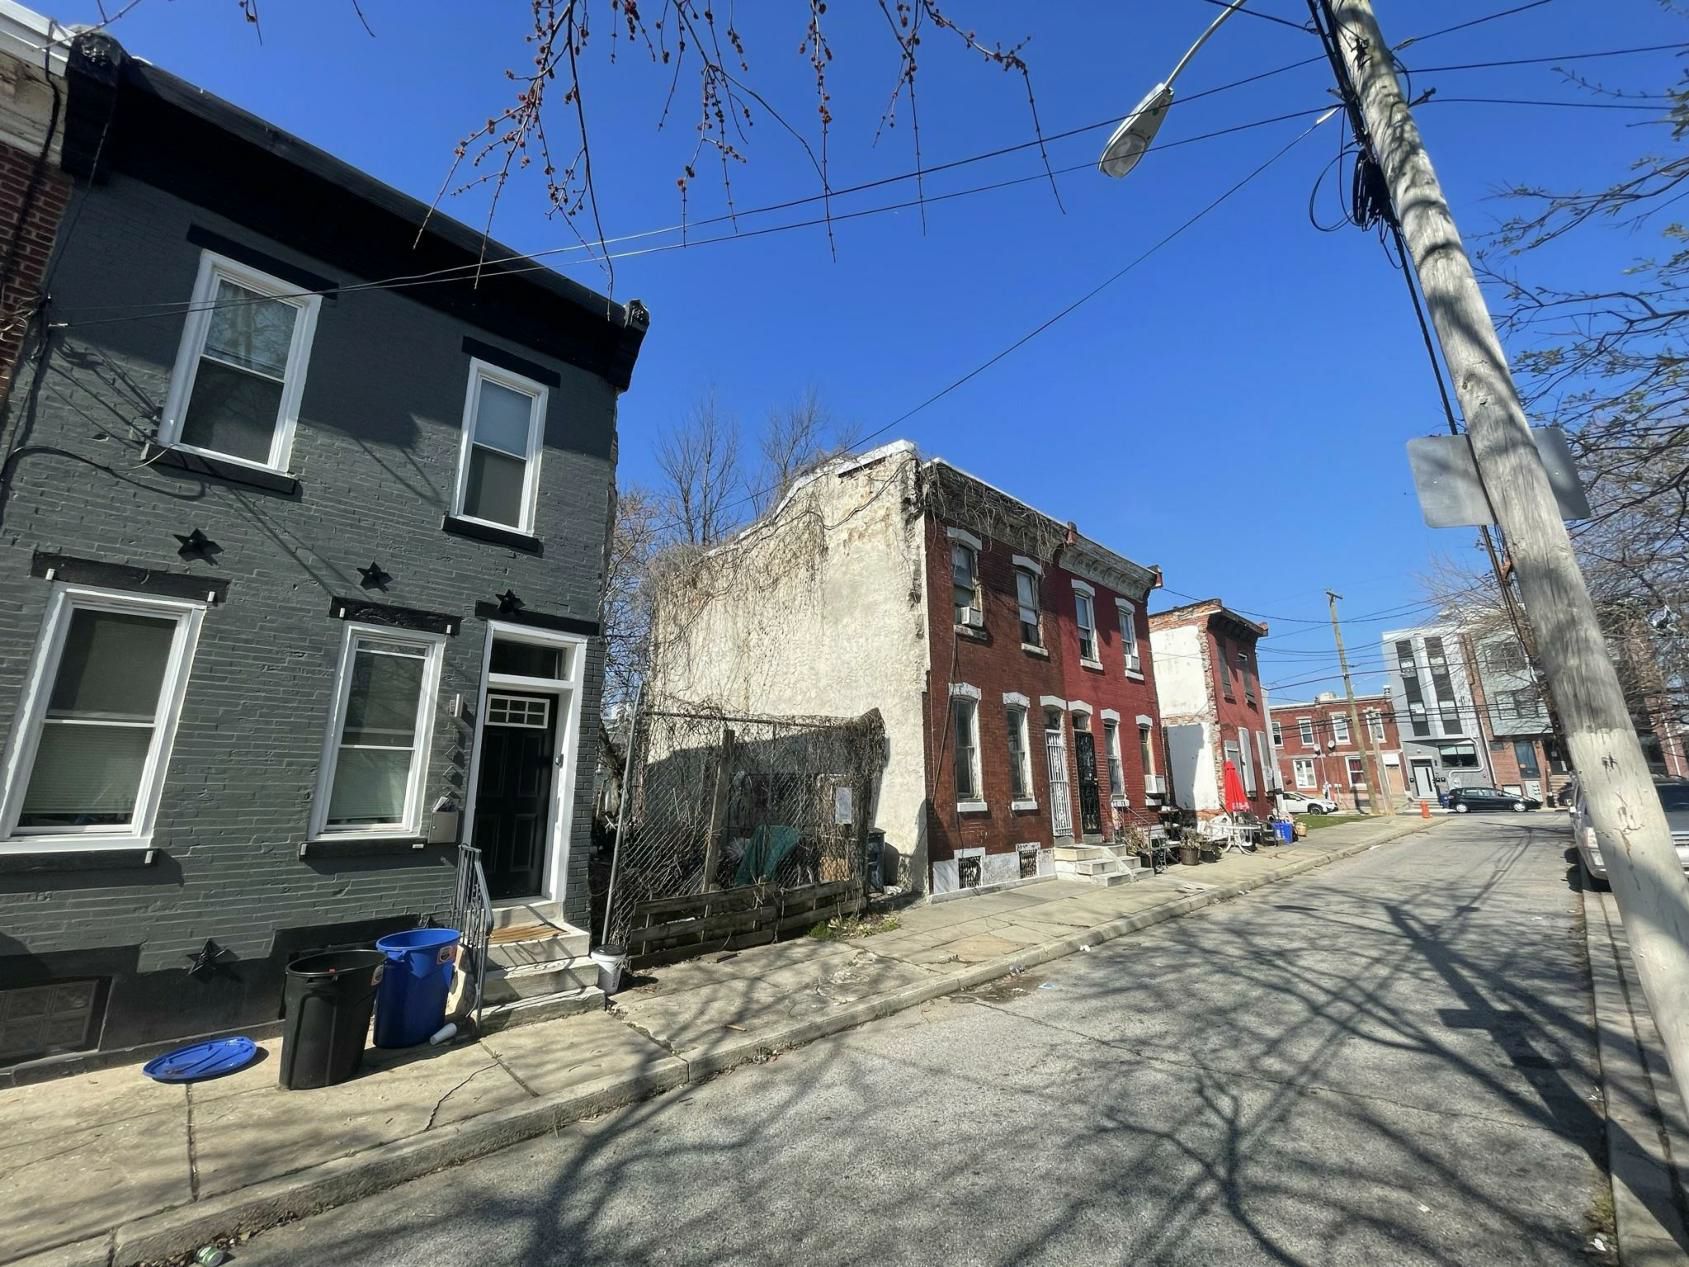 1444 North Etting Street. Site conditions prior to redevelopment. Looking northwest. Credit: Moto Designshop via the City of Philadelphia